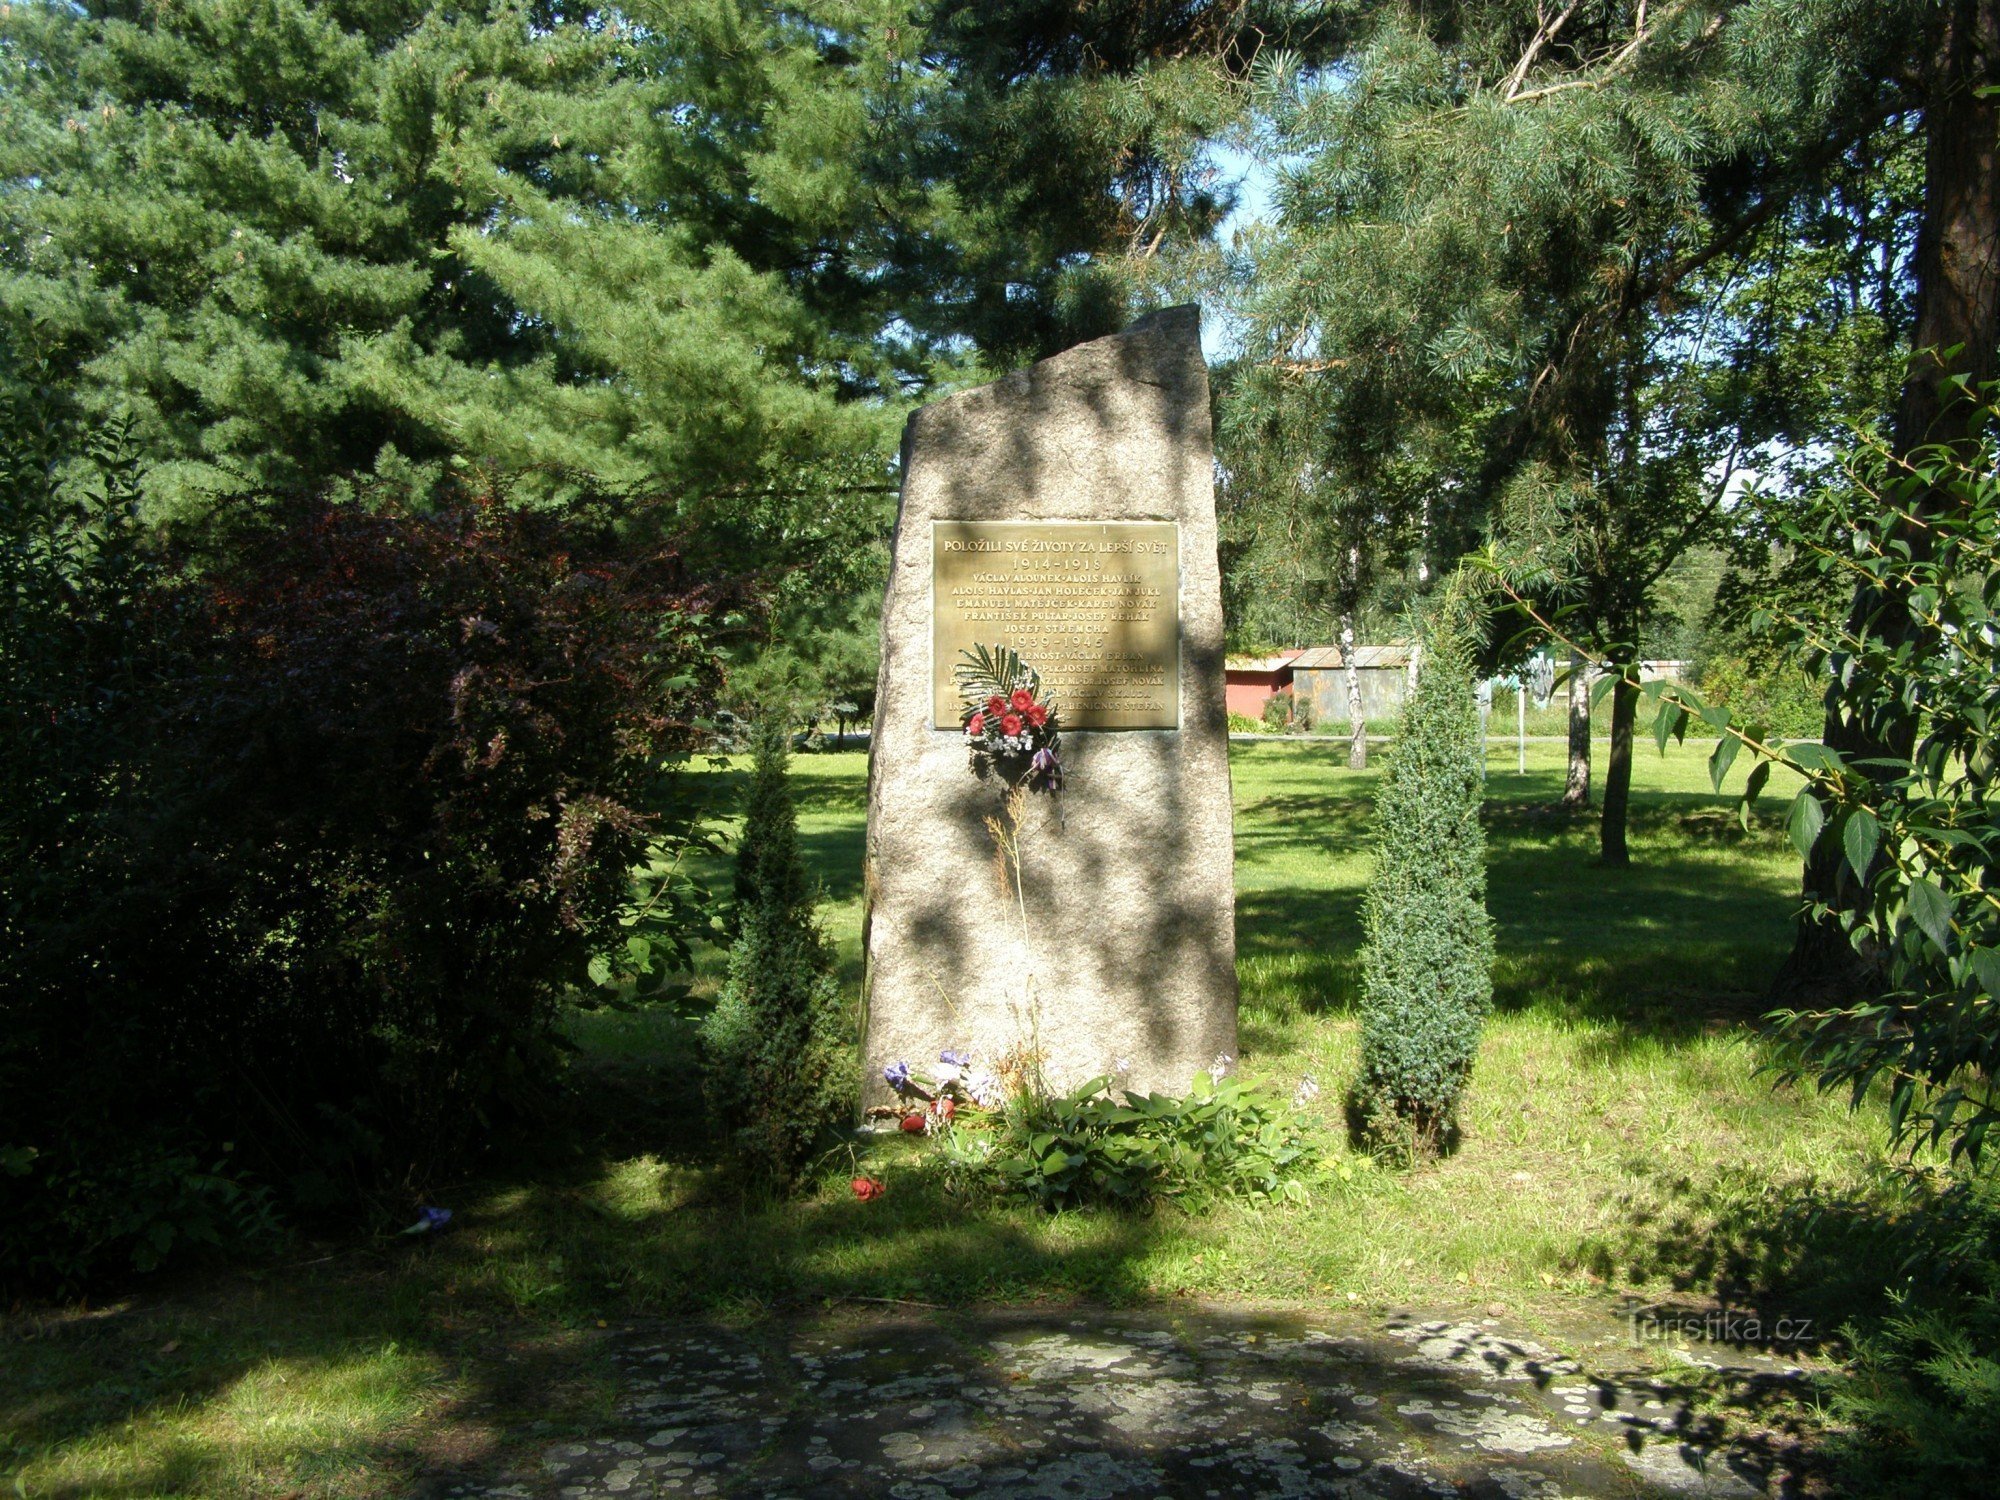 Hradec Králové - spomenik žrtvam vojn v Šlezijskem predmestju